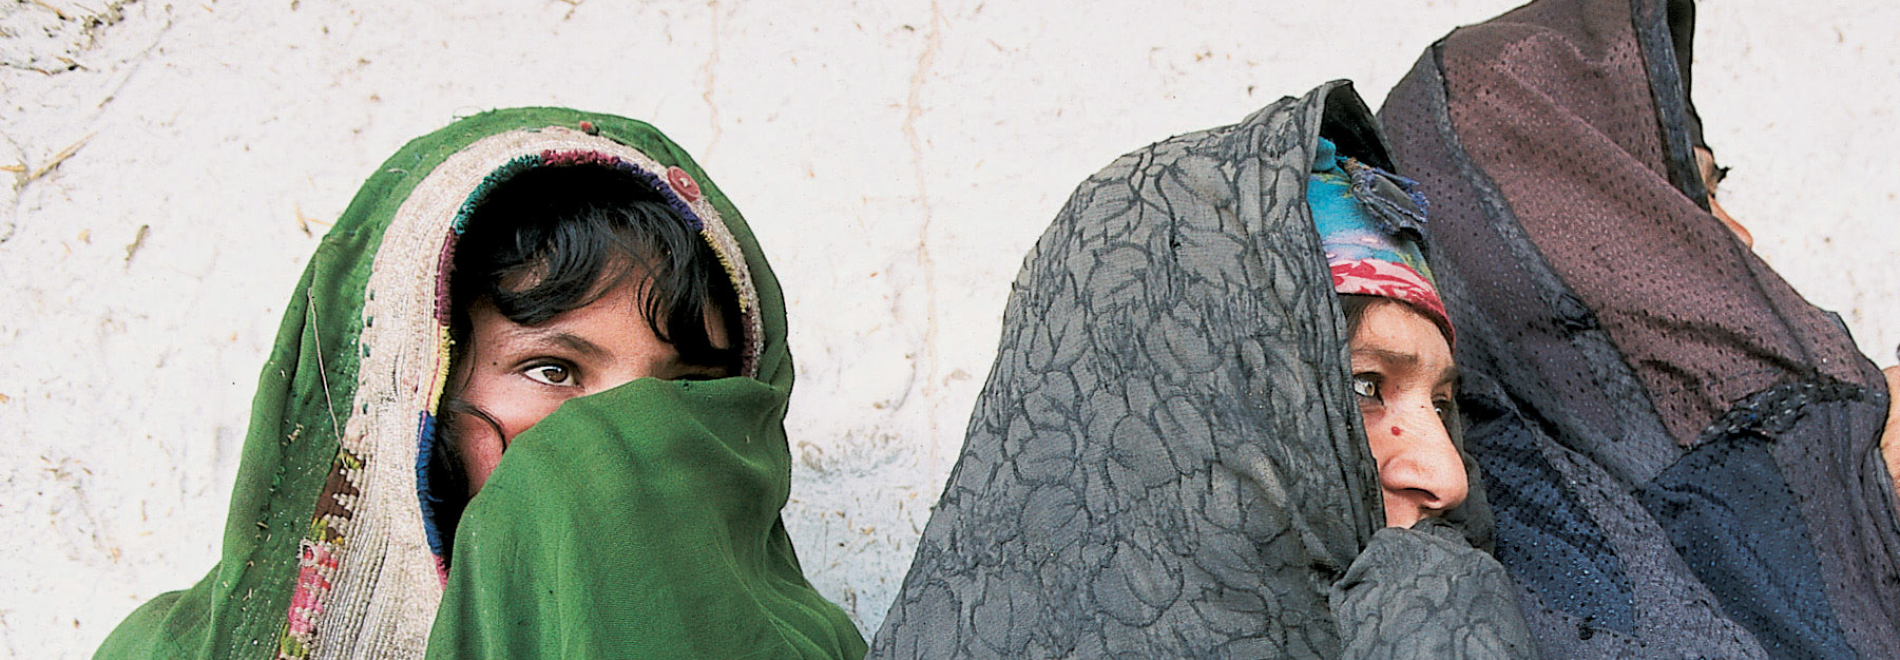 Frauen in Afghanistan. Foto: Stéphane Lehr